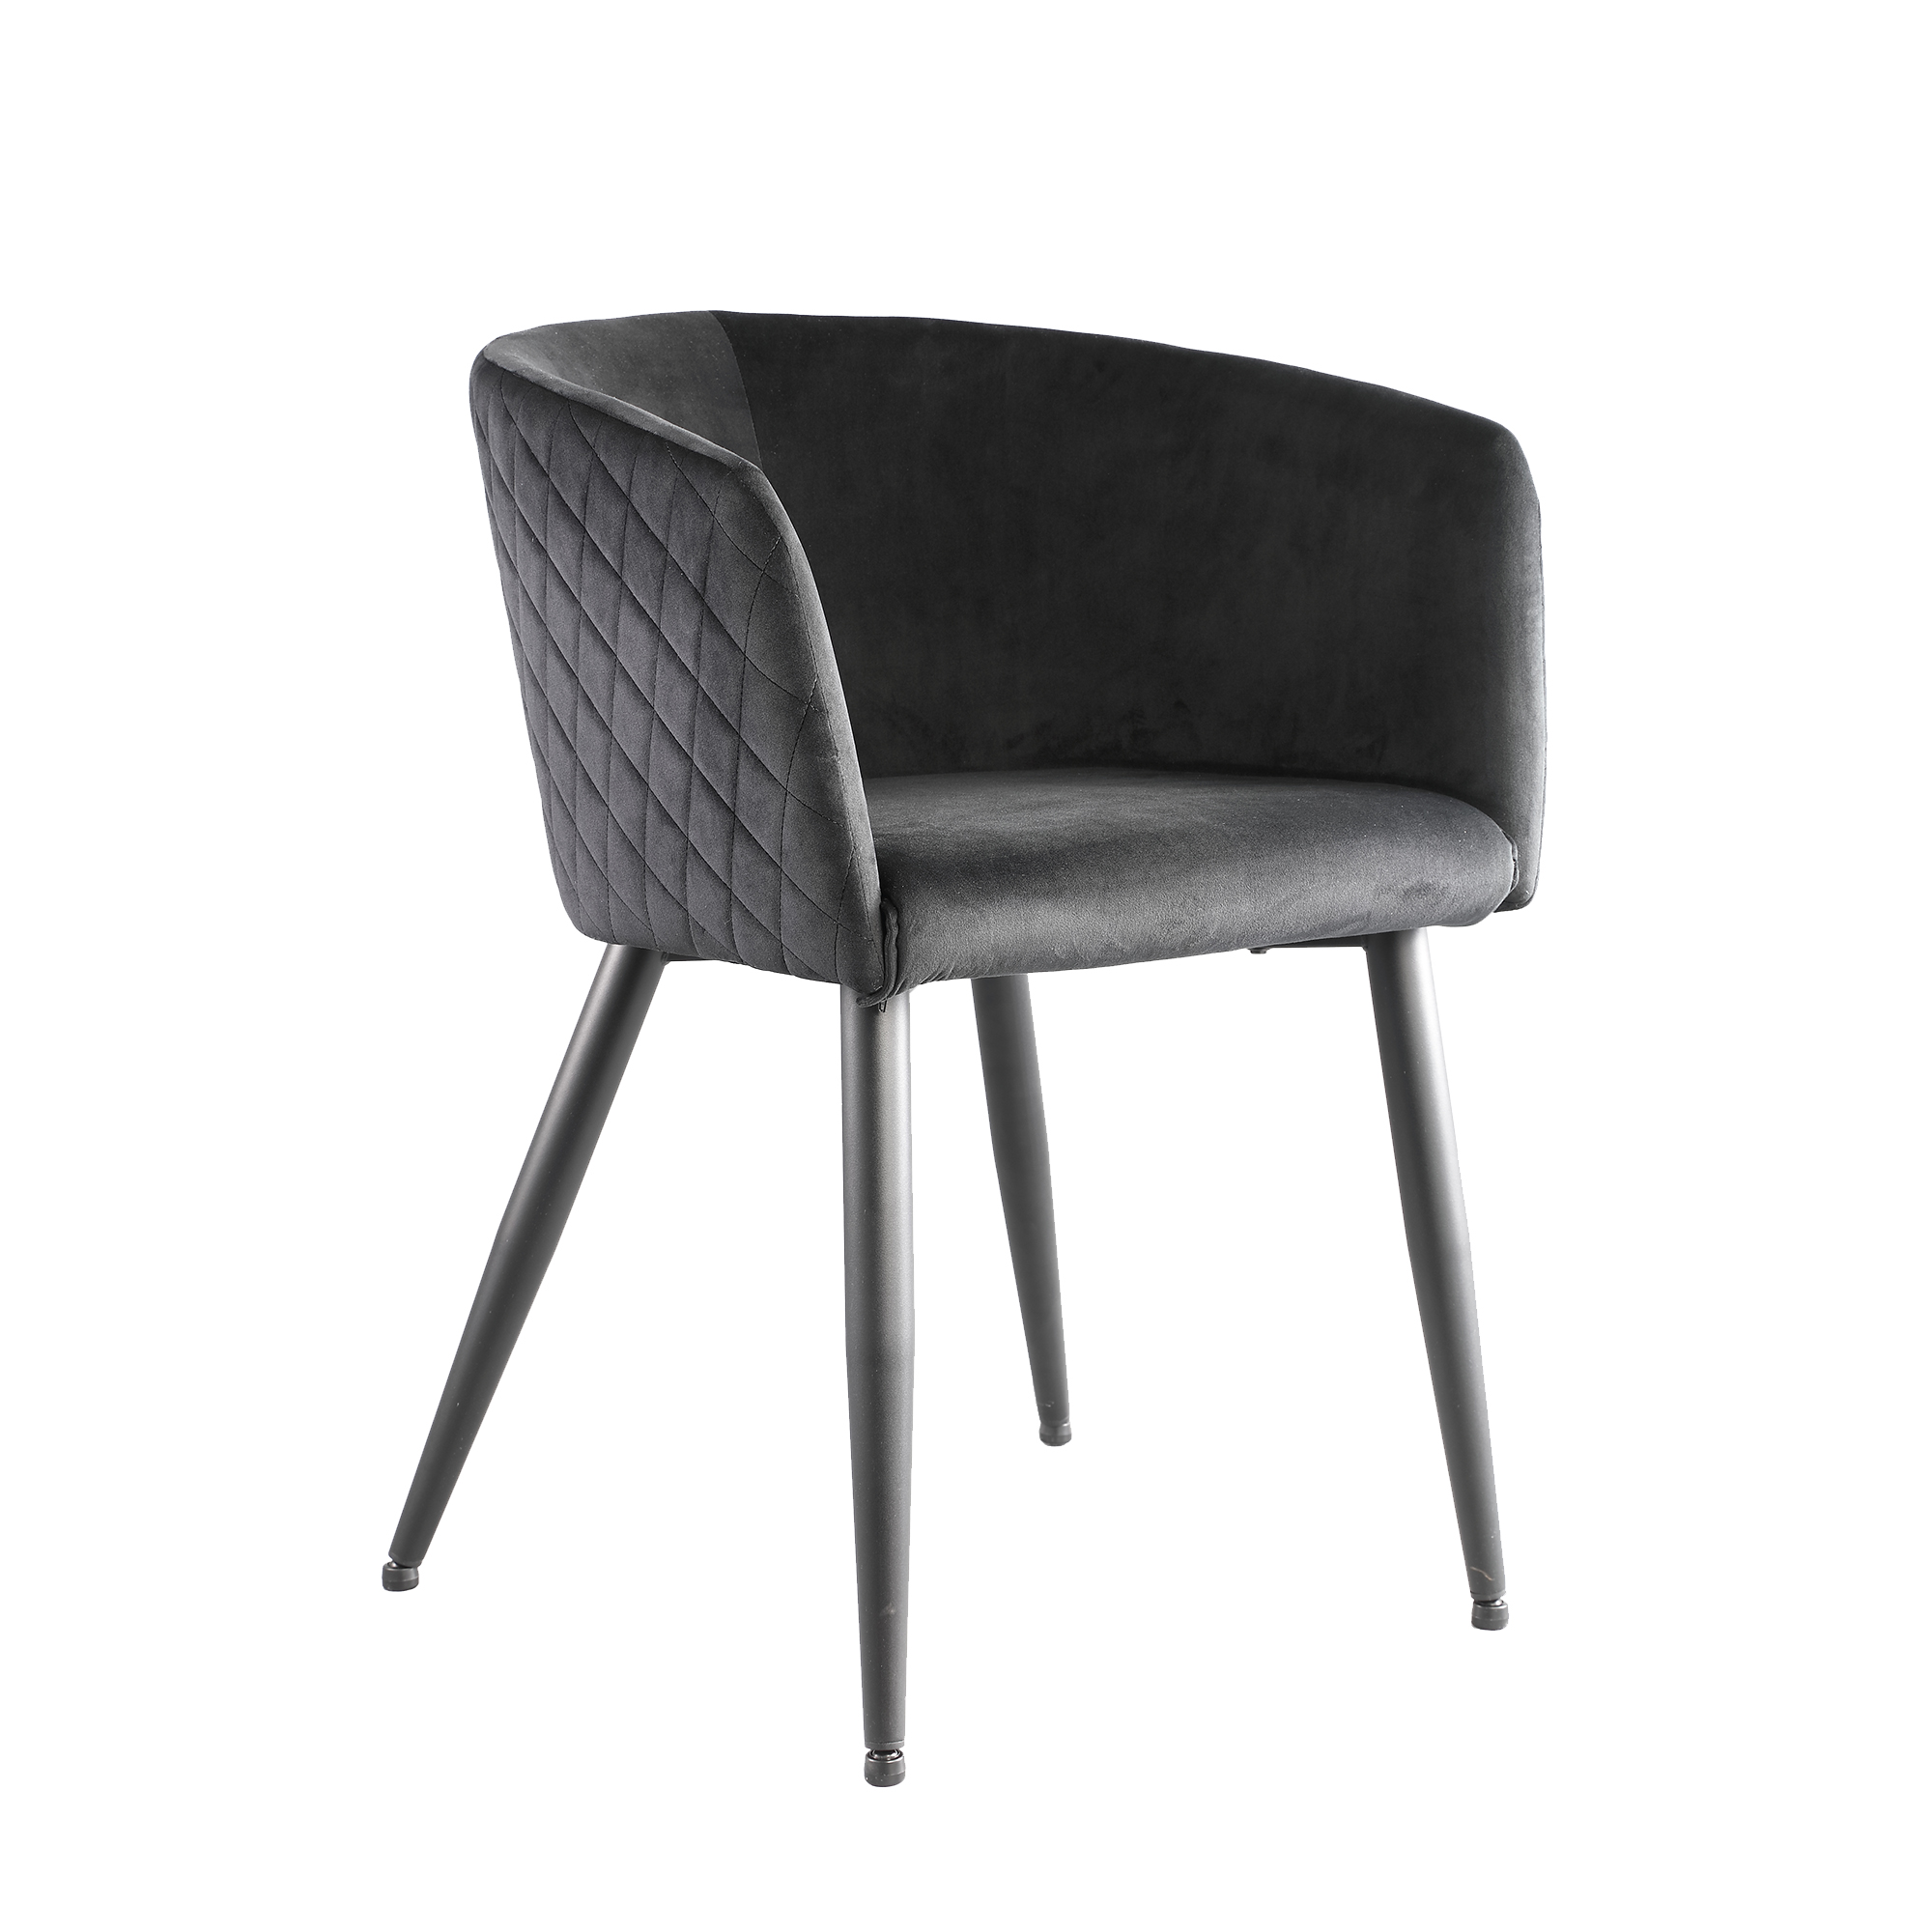 Mace Velvet Black chair half round metal legs - KD